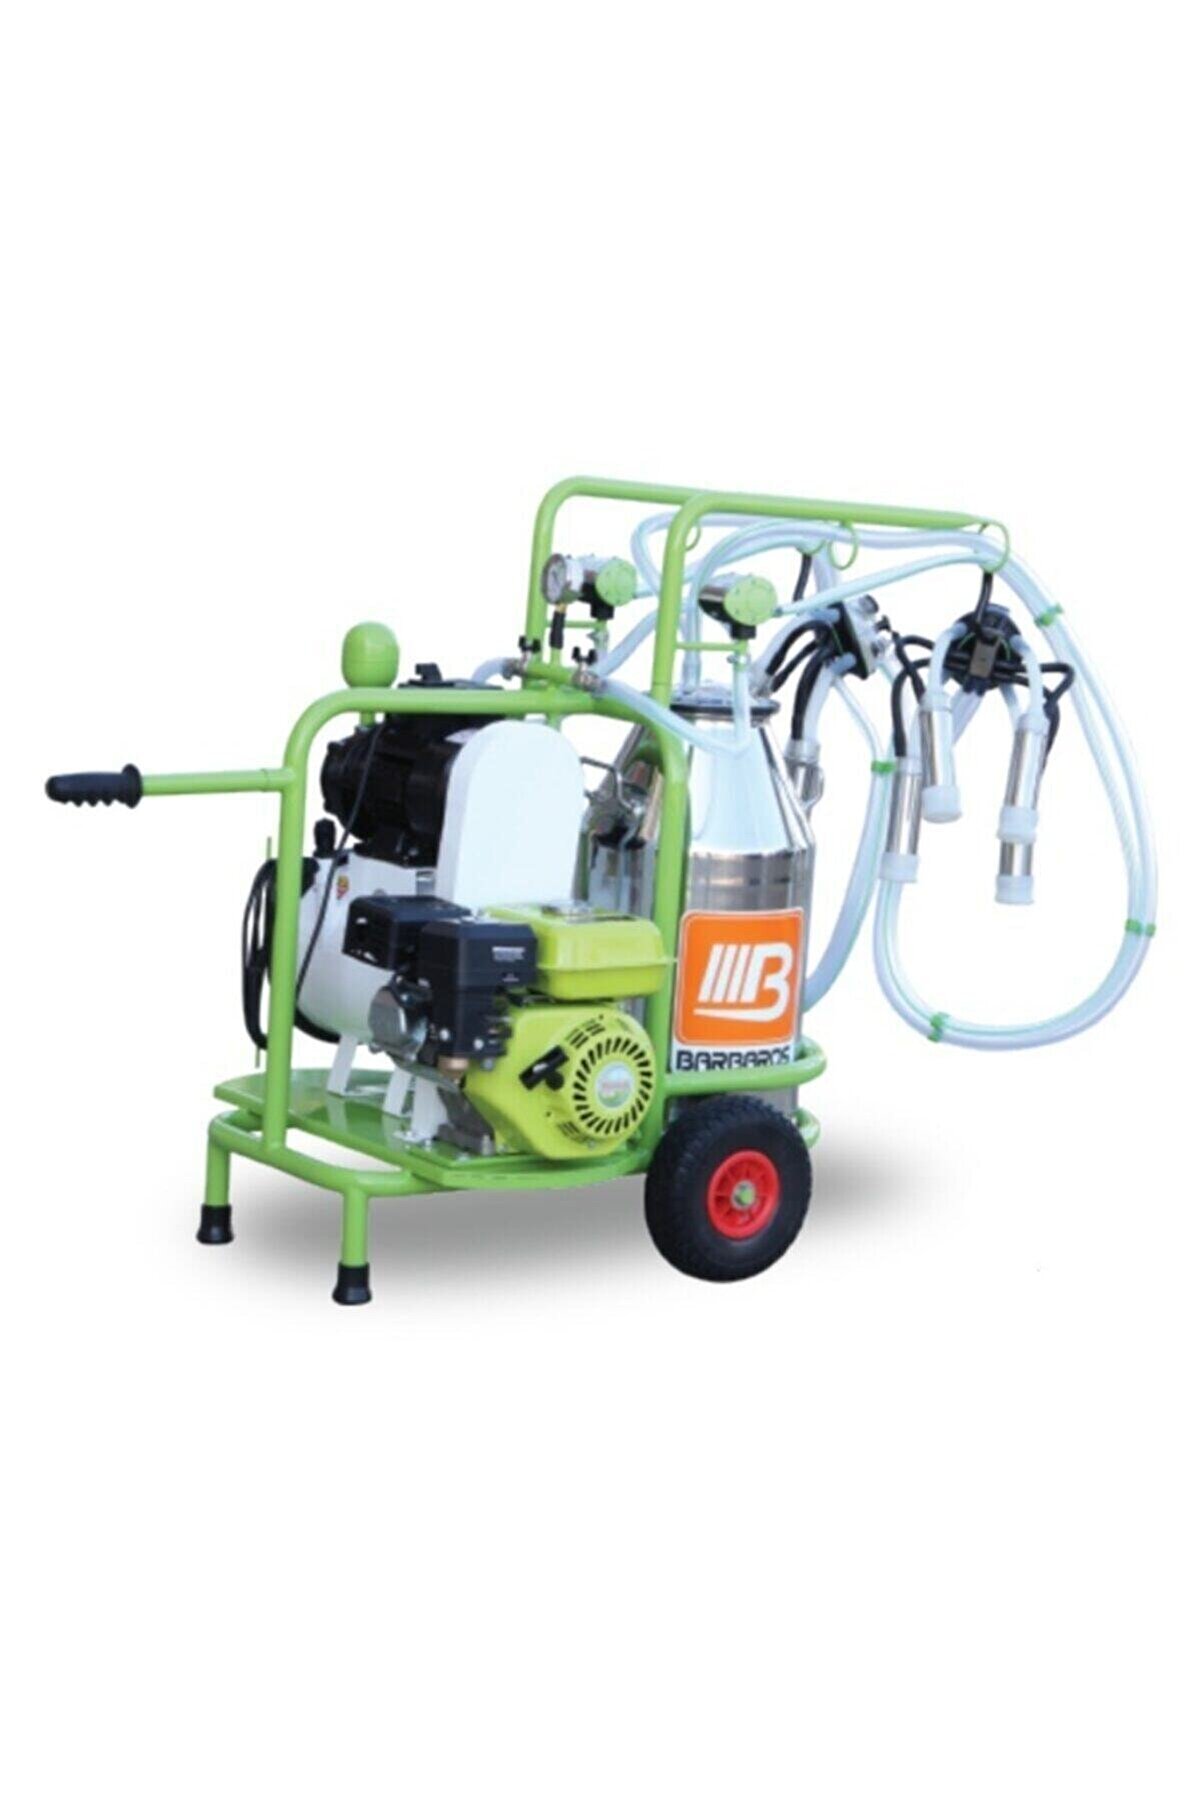 SYNOPE Barbaros Benzinli Model Çift Sağım Tek Krom Güğüm 70 Lik Kuru Pompa Süt Sağma Makinesi